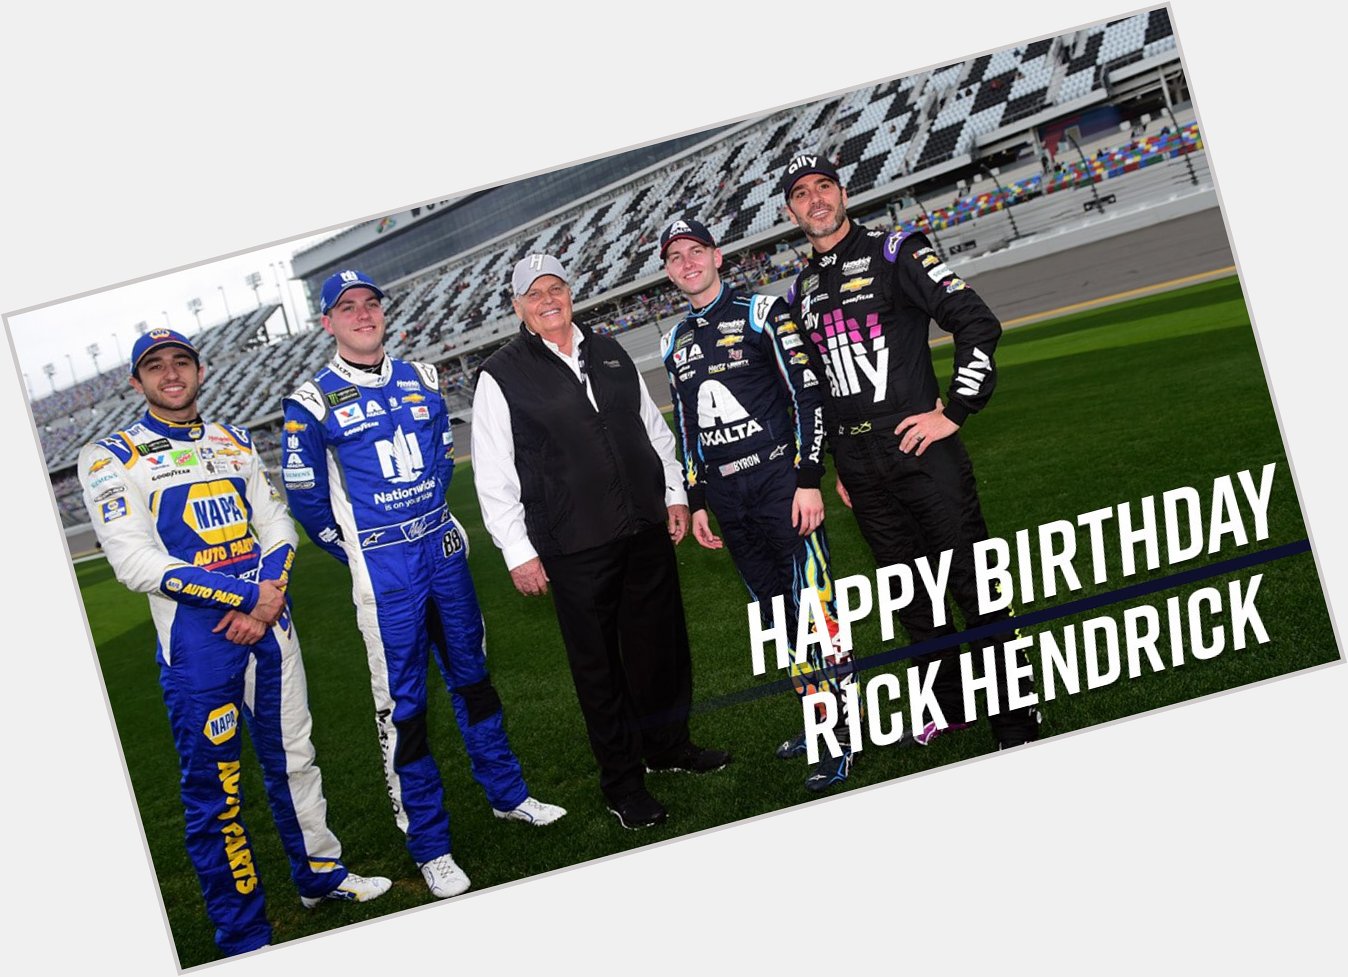 Today we re wishing Rick Hendrick a very happy birthday!  